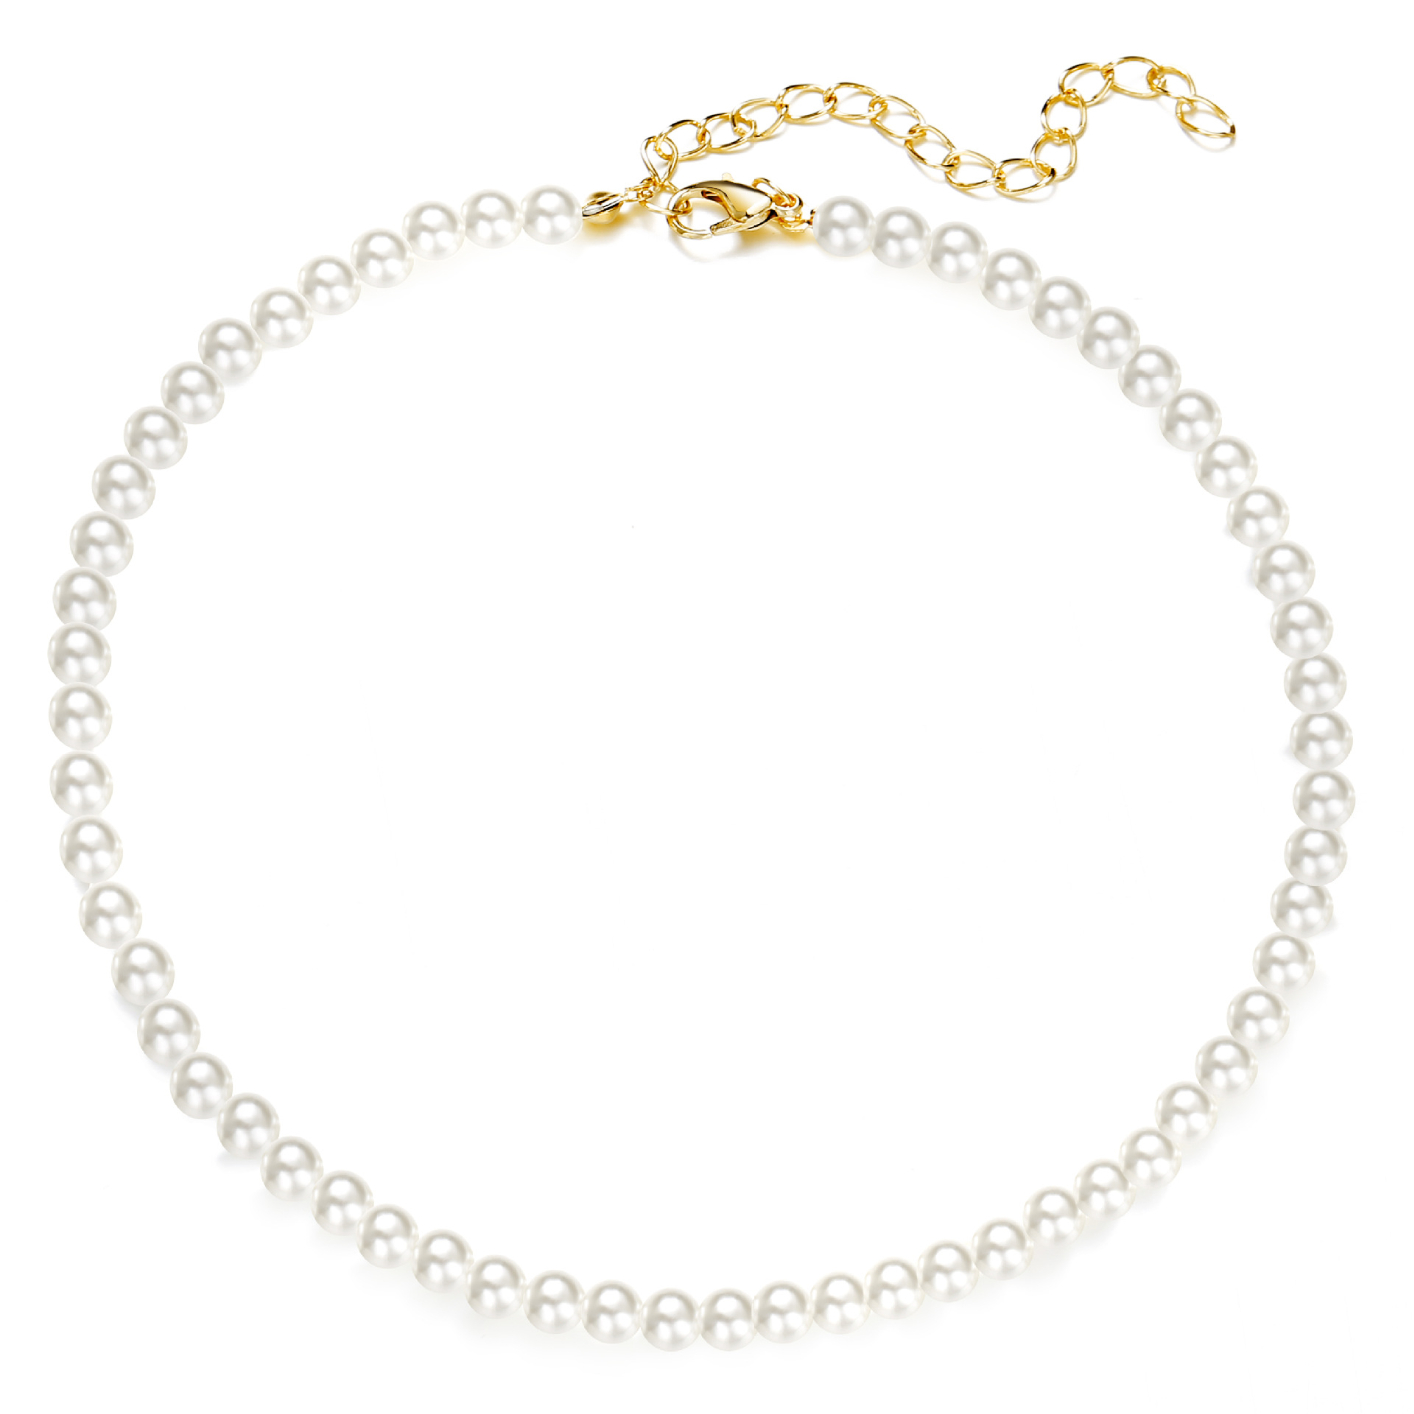 50668 Elegant White Imitation Pearl Choker Necklace Big Round Pearl Wedding Necklace for Women Charm Fashion Jewelry